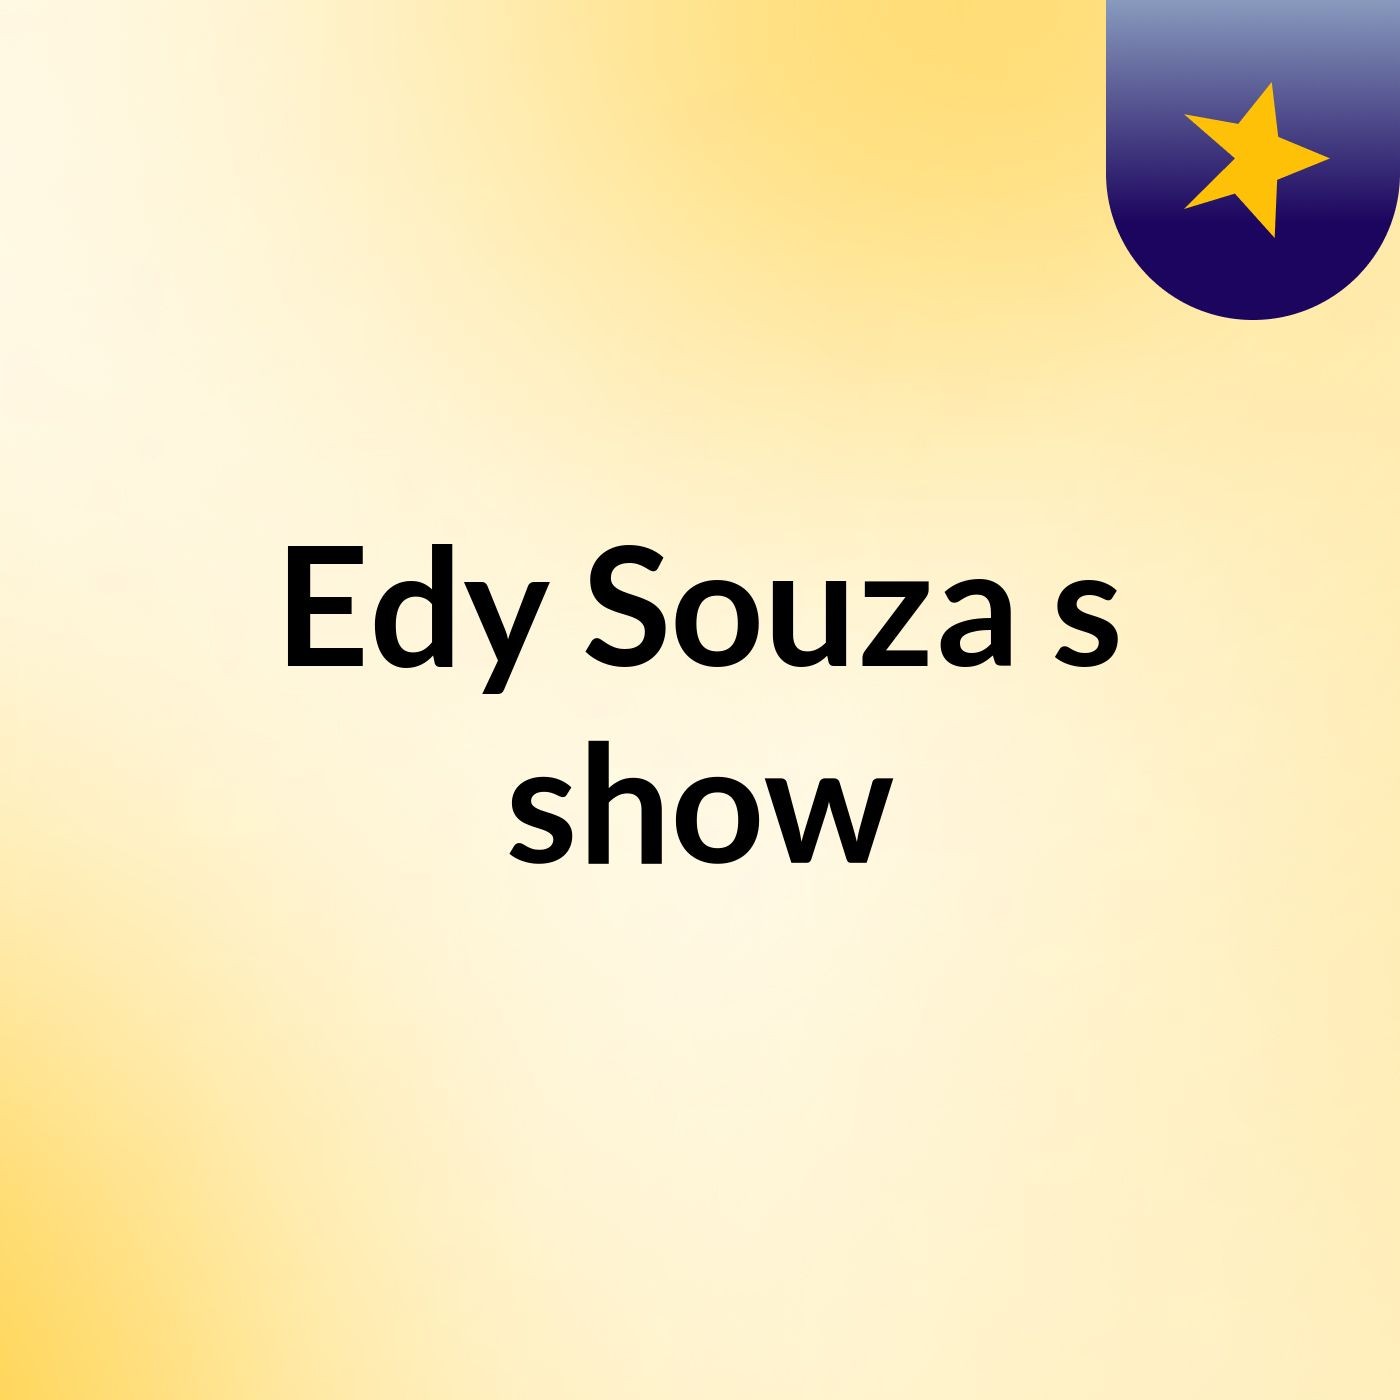 Edy Souza's show